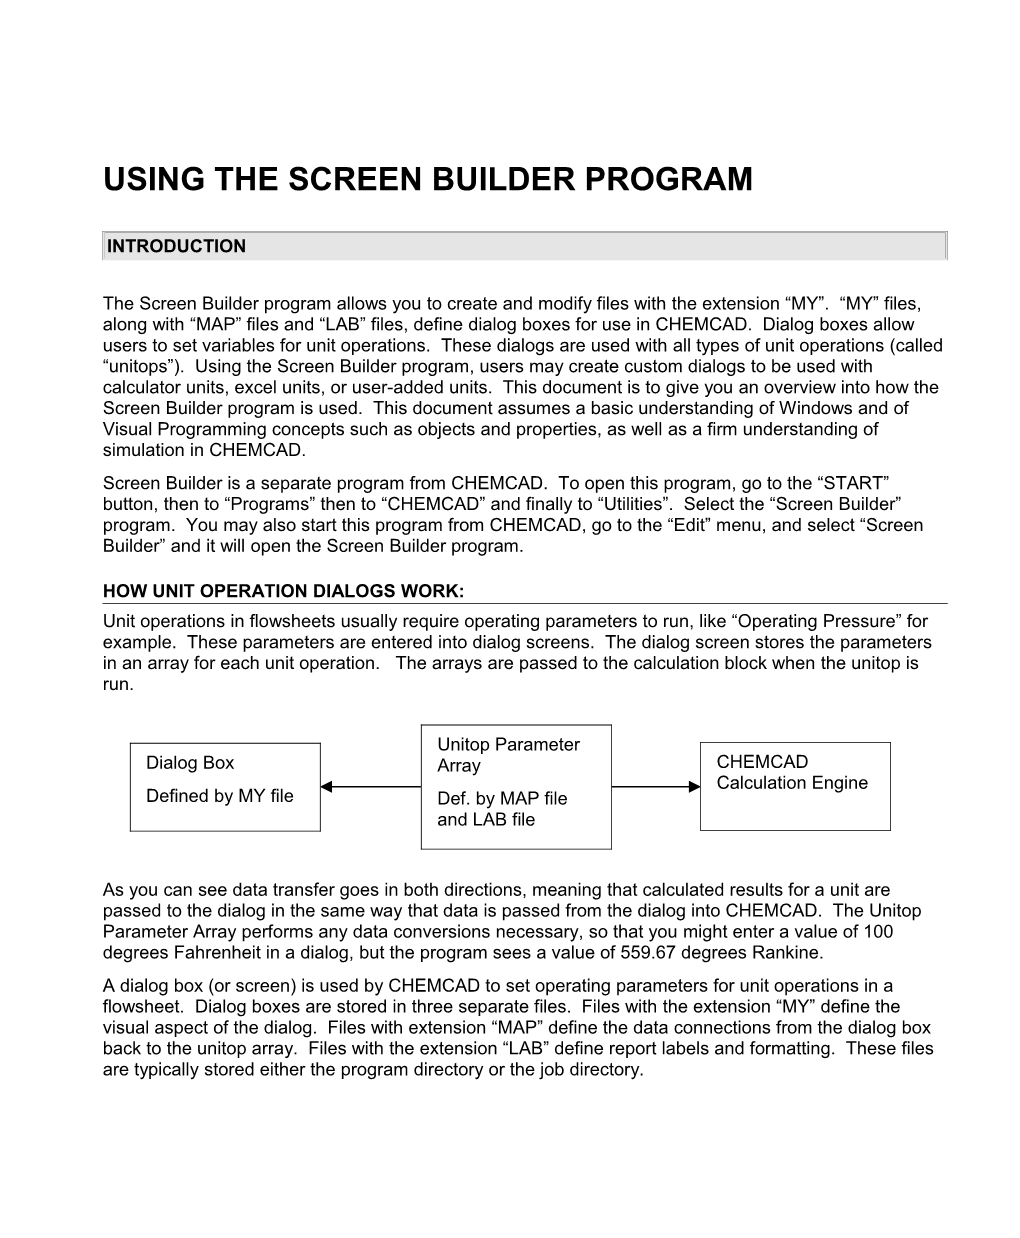 Using the Screen Builder Program